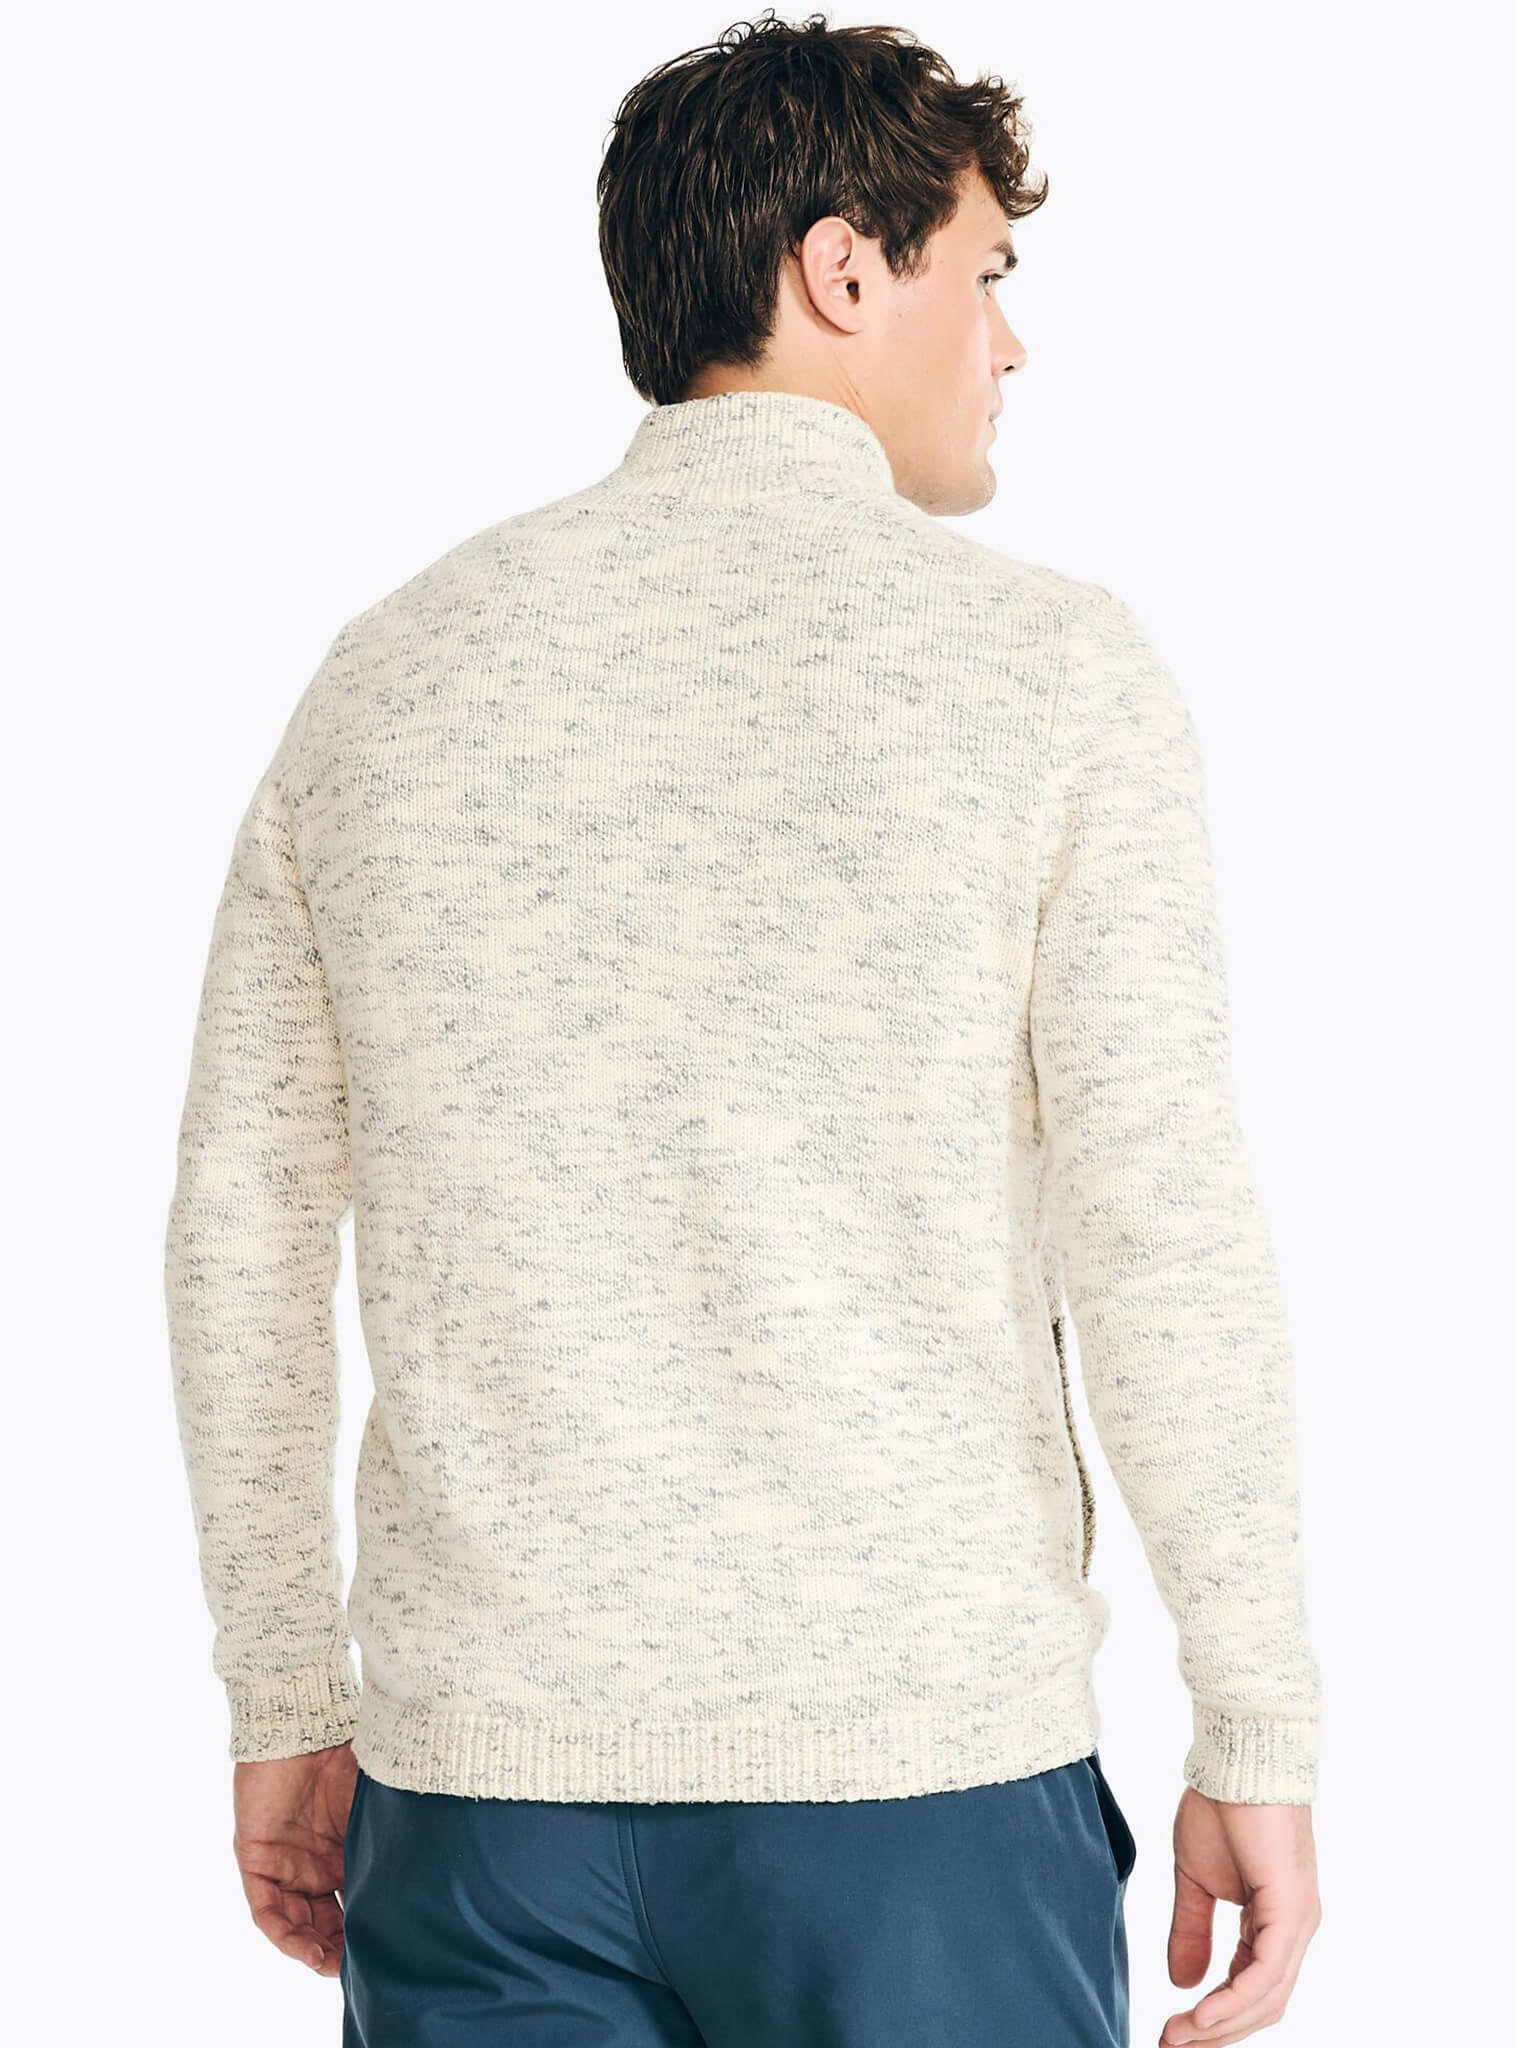 Sweater Manga Larga Jaspeado Cierre Completo Hombre